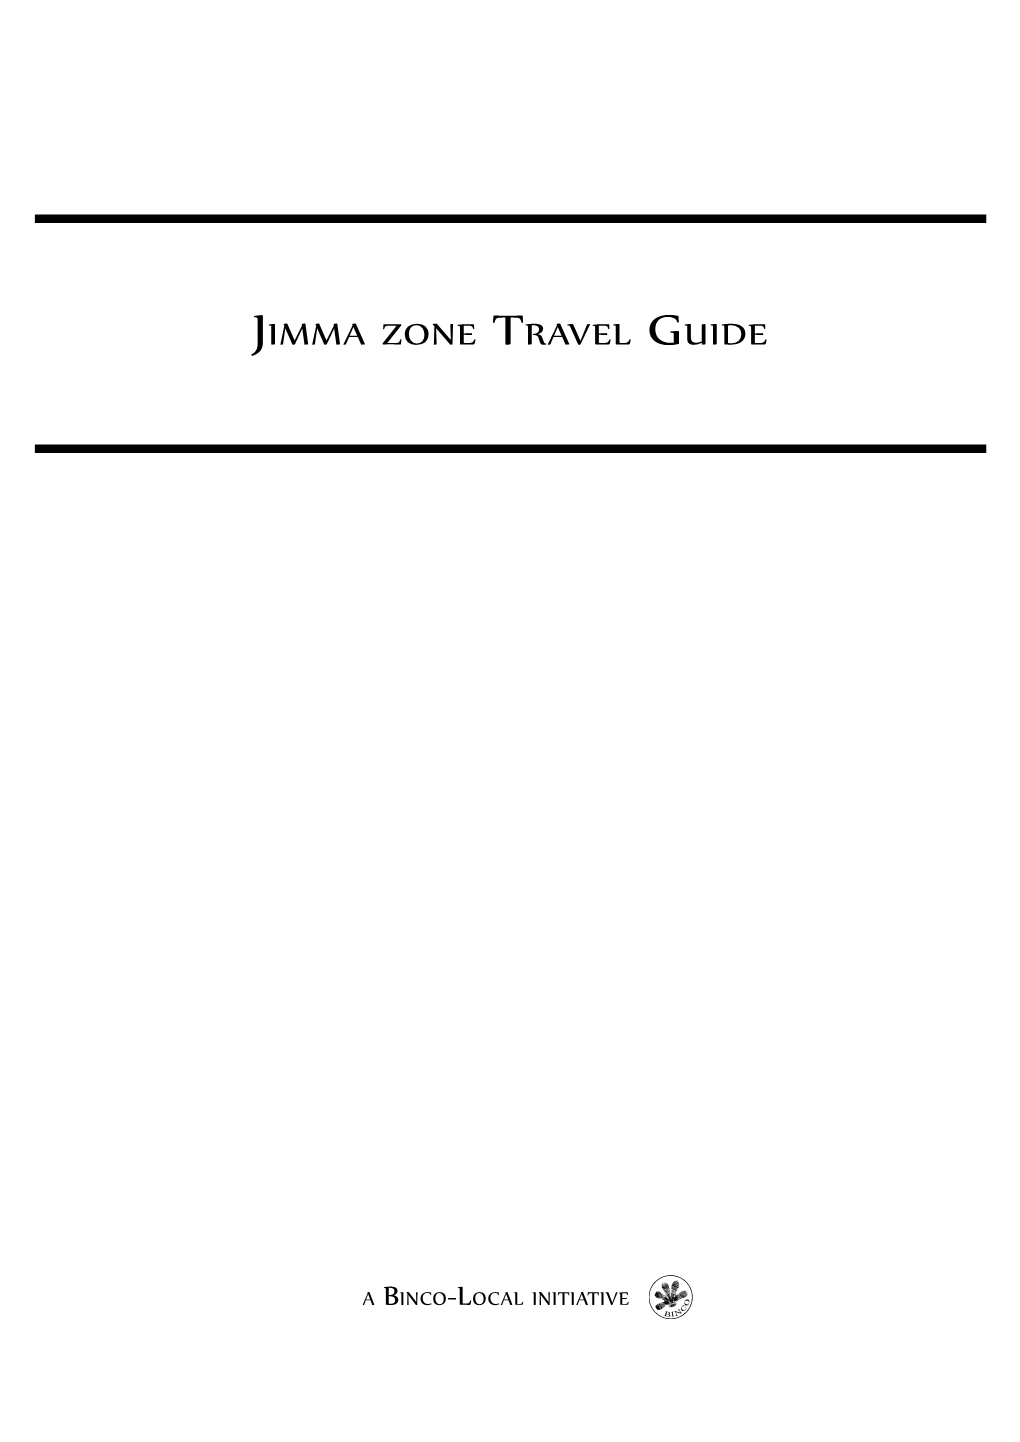 Jimma Zone Travel Guide